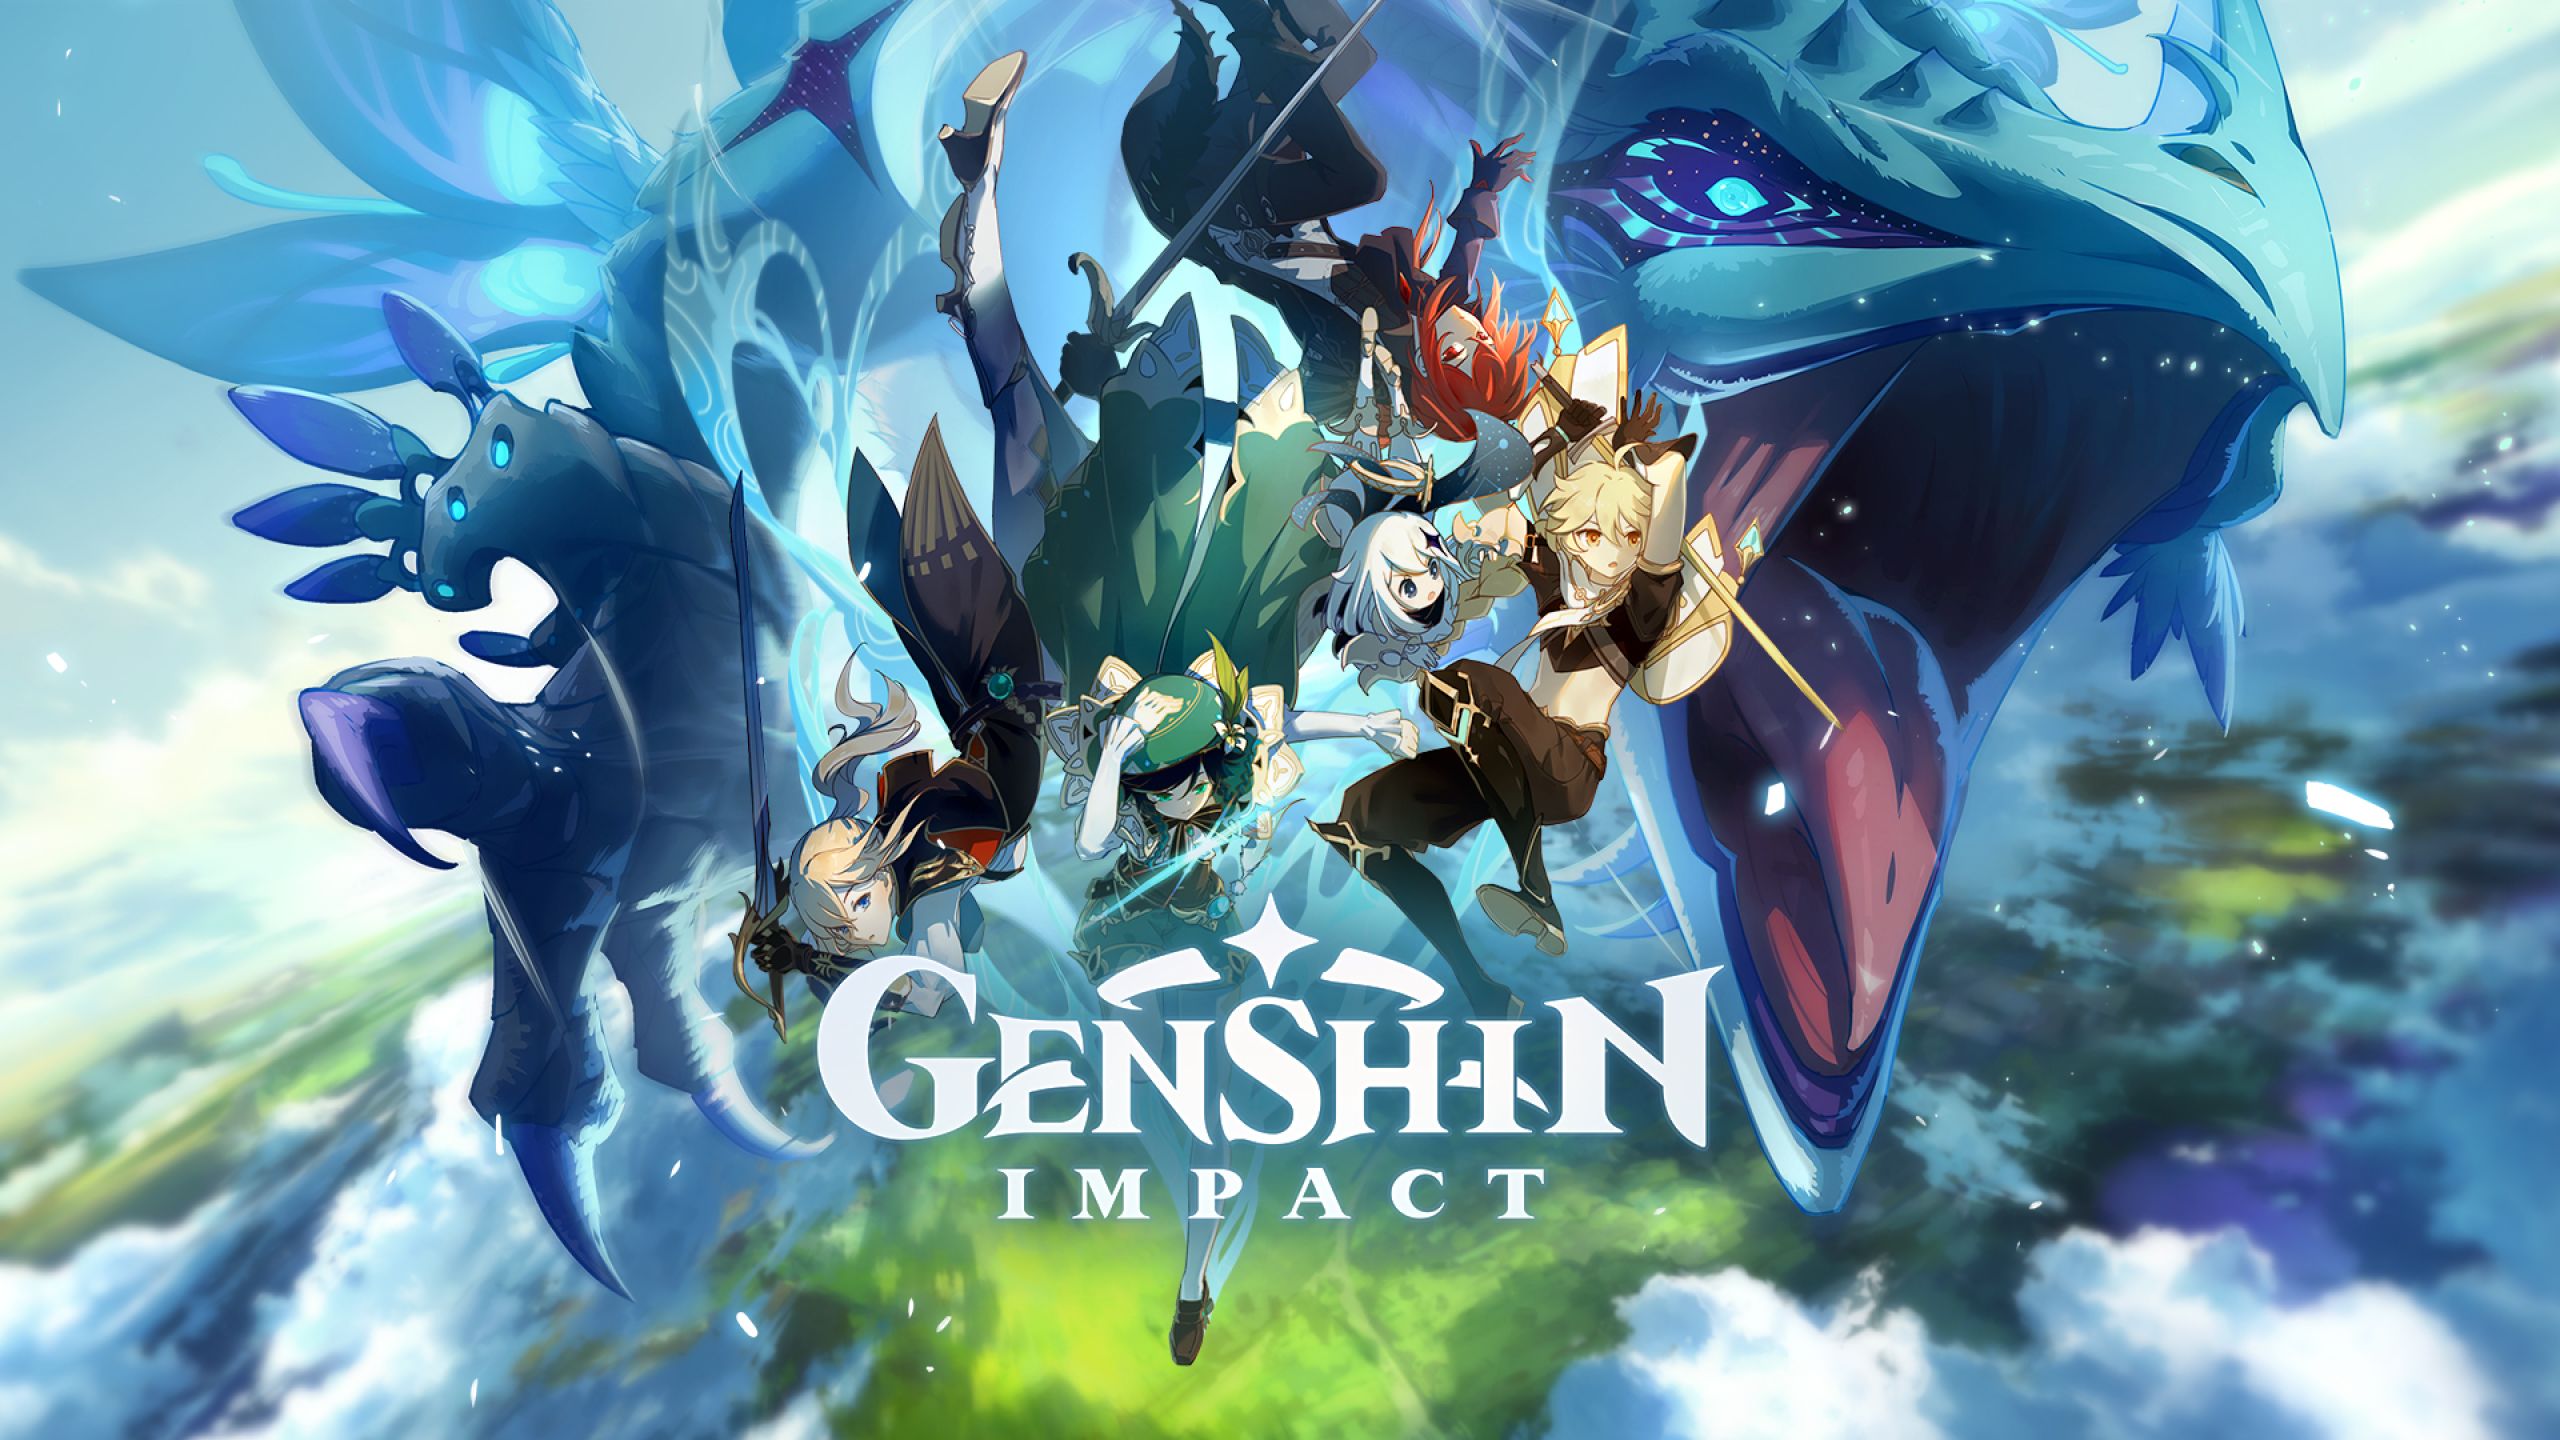 Genshin Impact 2020 1440P Resolution Wallpaper, HD Games 4K Wallpaper, Image, Photo and Background